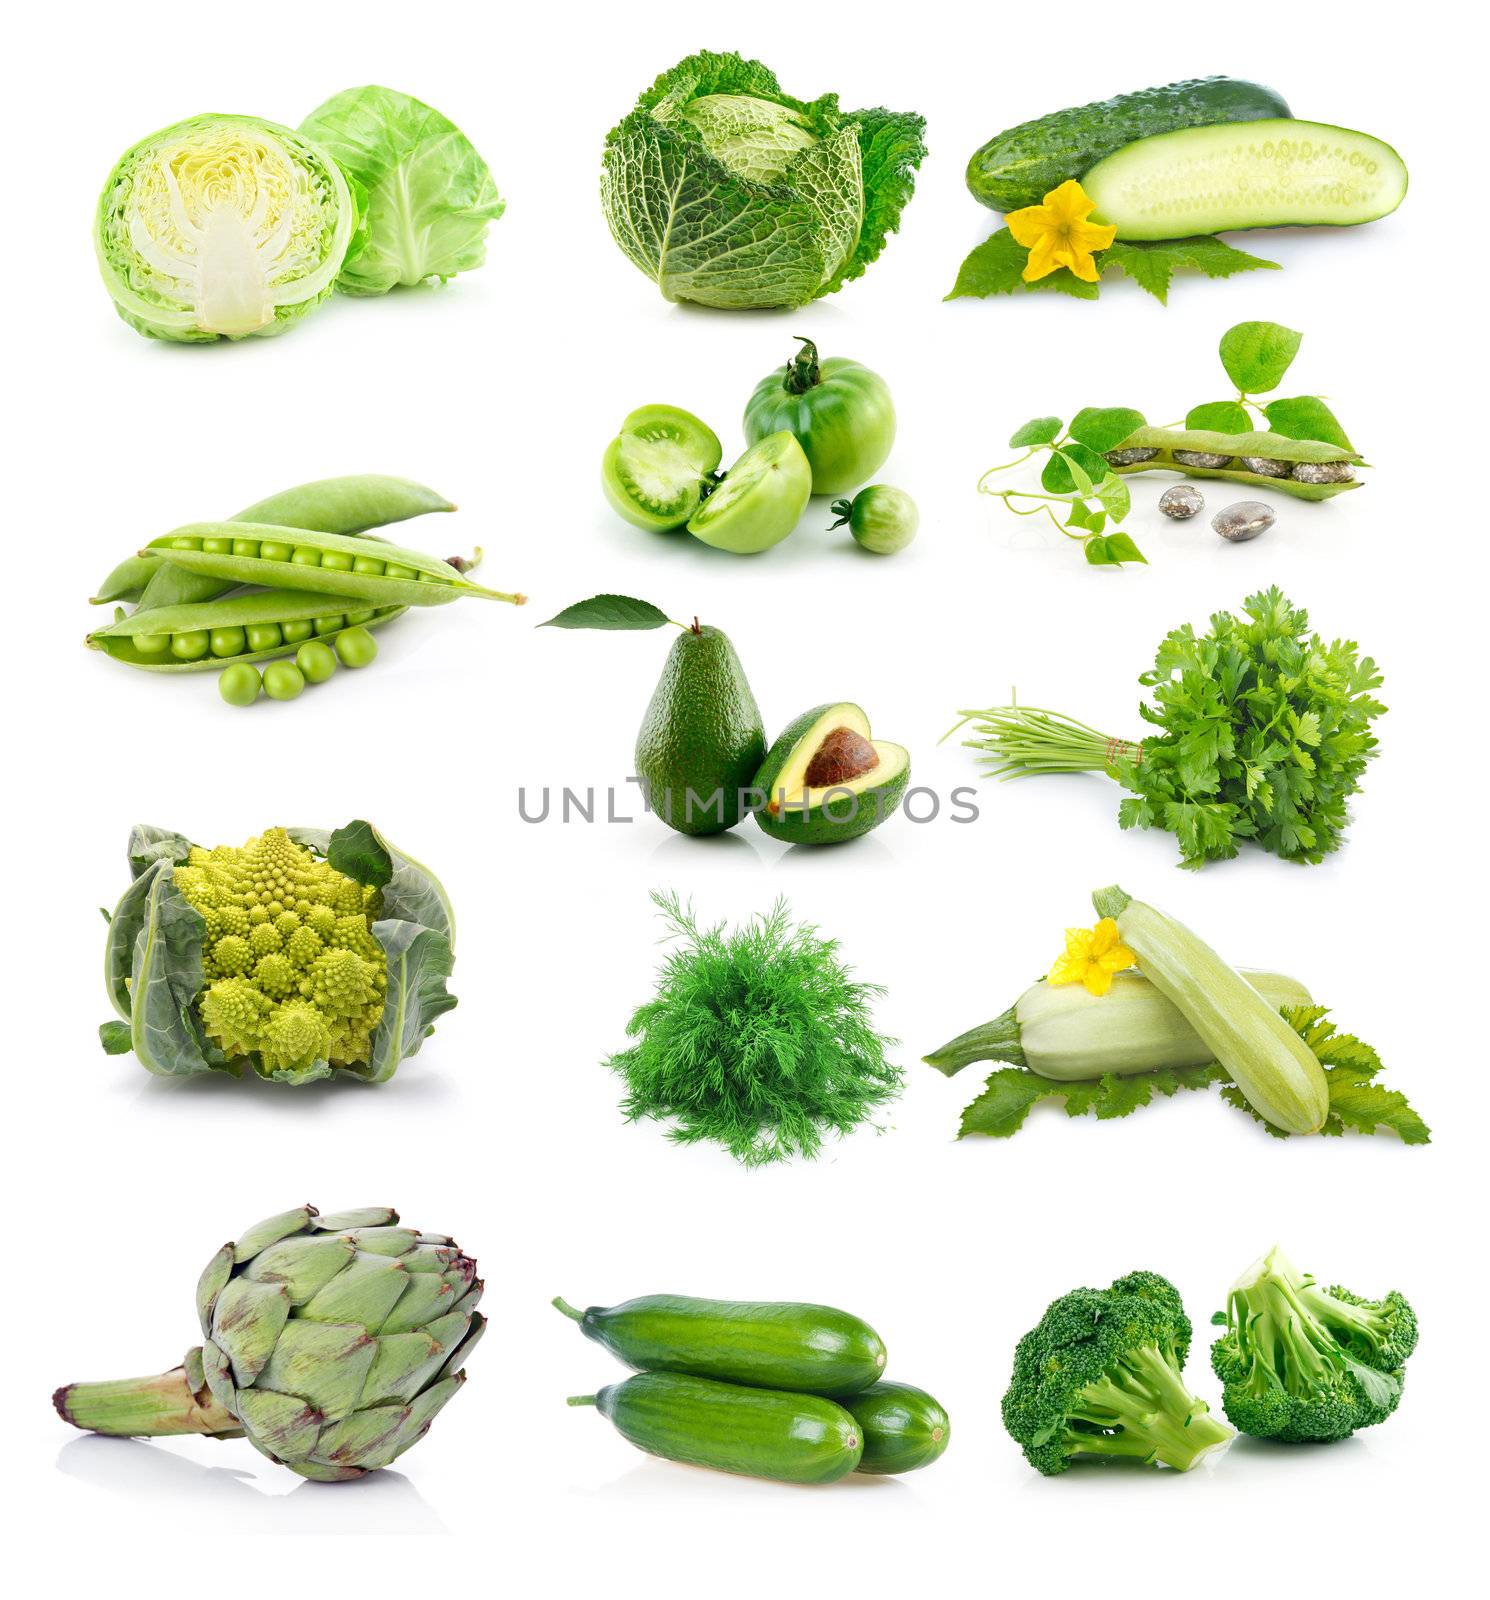 Set of fresh green vegetables isolated on white background